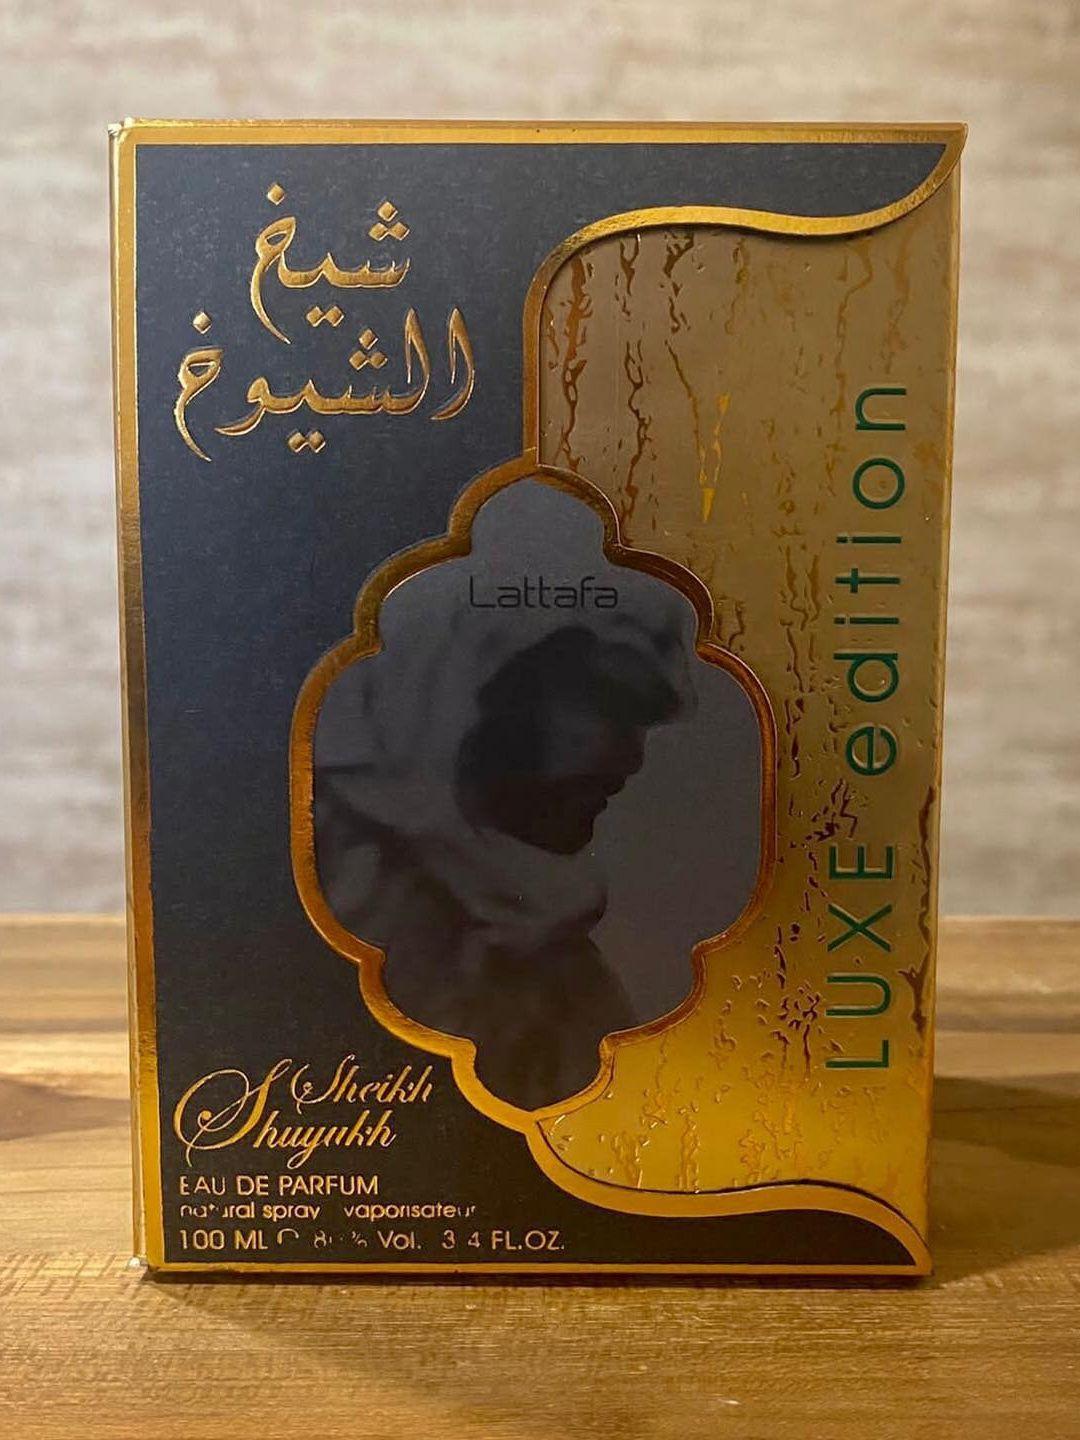 lattafa sheikh al shuyukh luxe eau de parfume - 100 ml